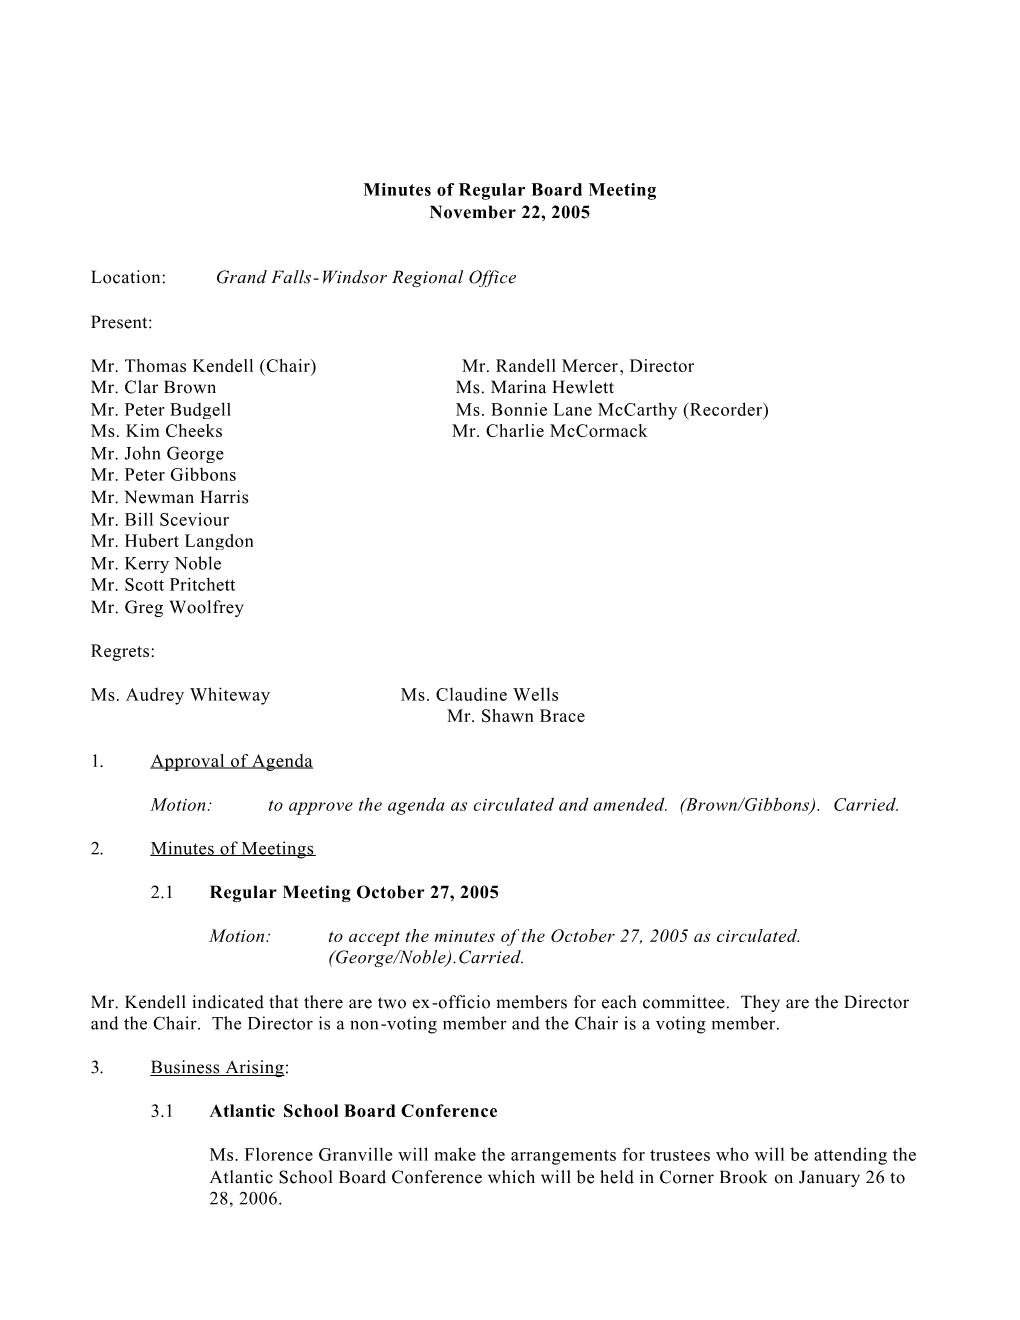 Minutes of Regular Board Meeting November 22, 2005 Location